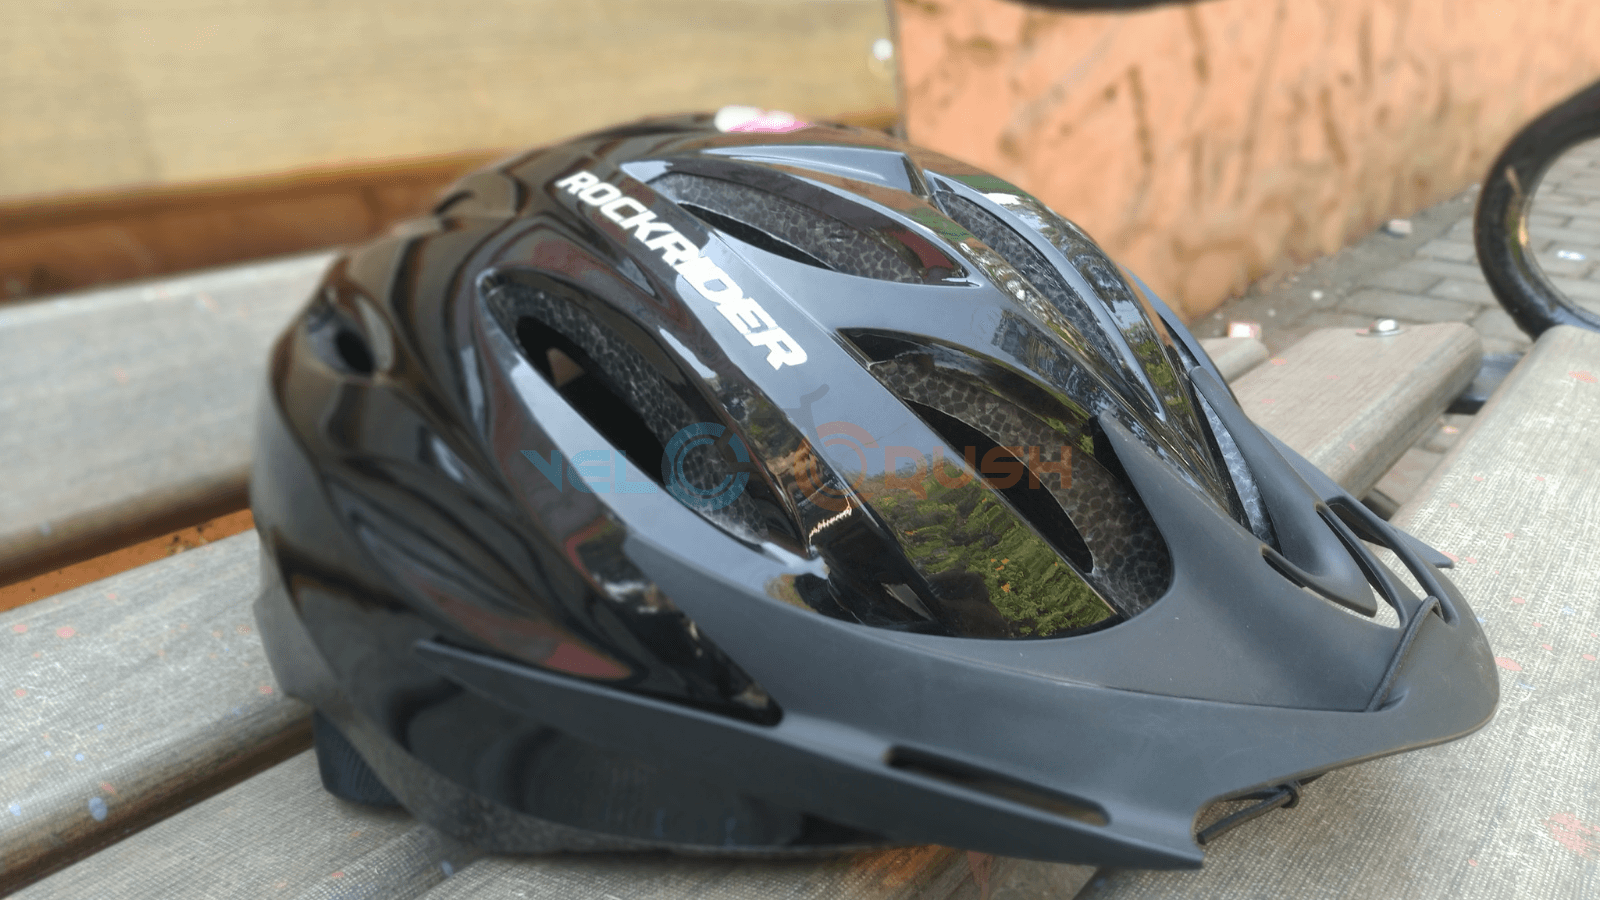 decathlon helmet bike